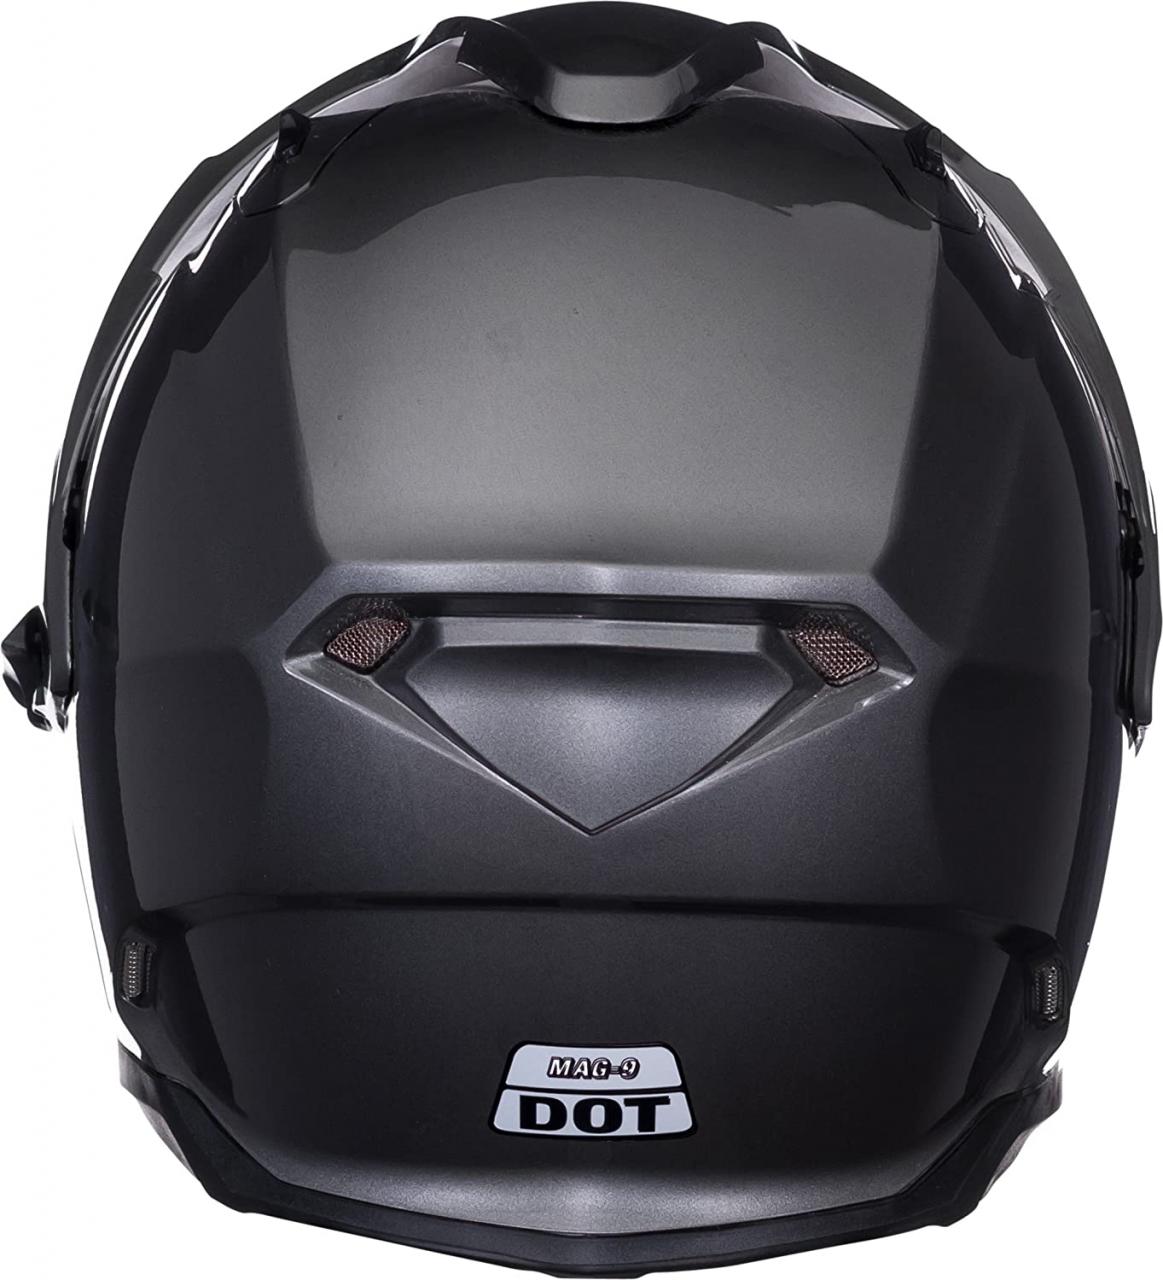 Buy Bell Mag-9 Open Face Motorcycle Helmet Online in Hong Kong. B00CHSHD4E